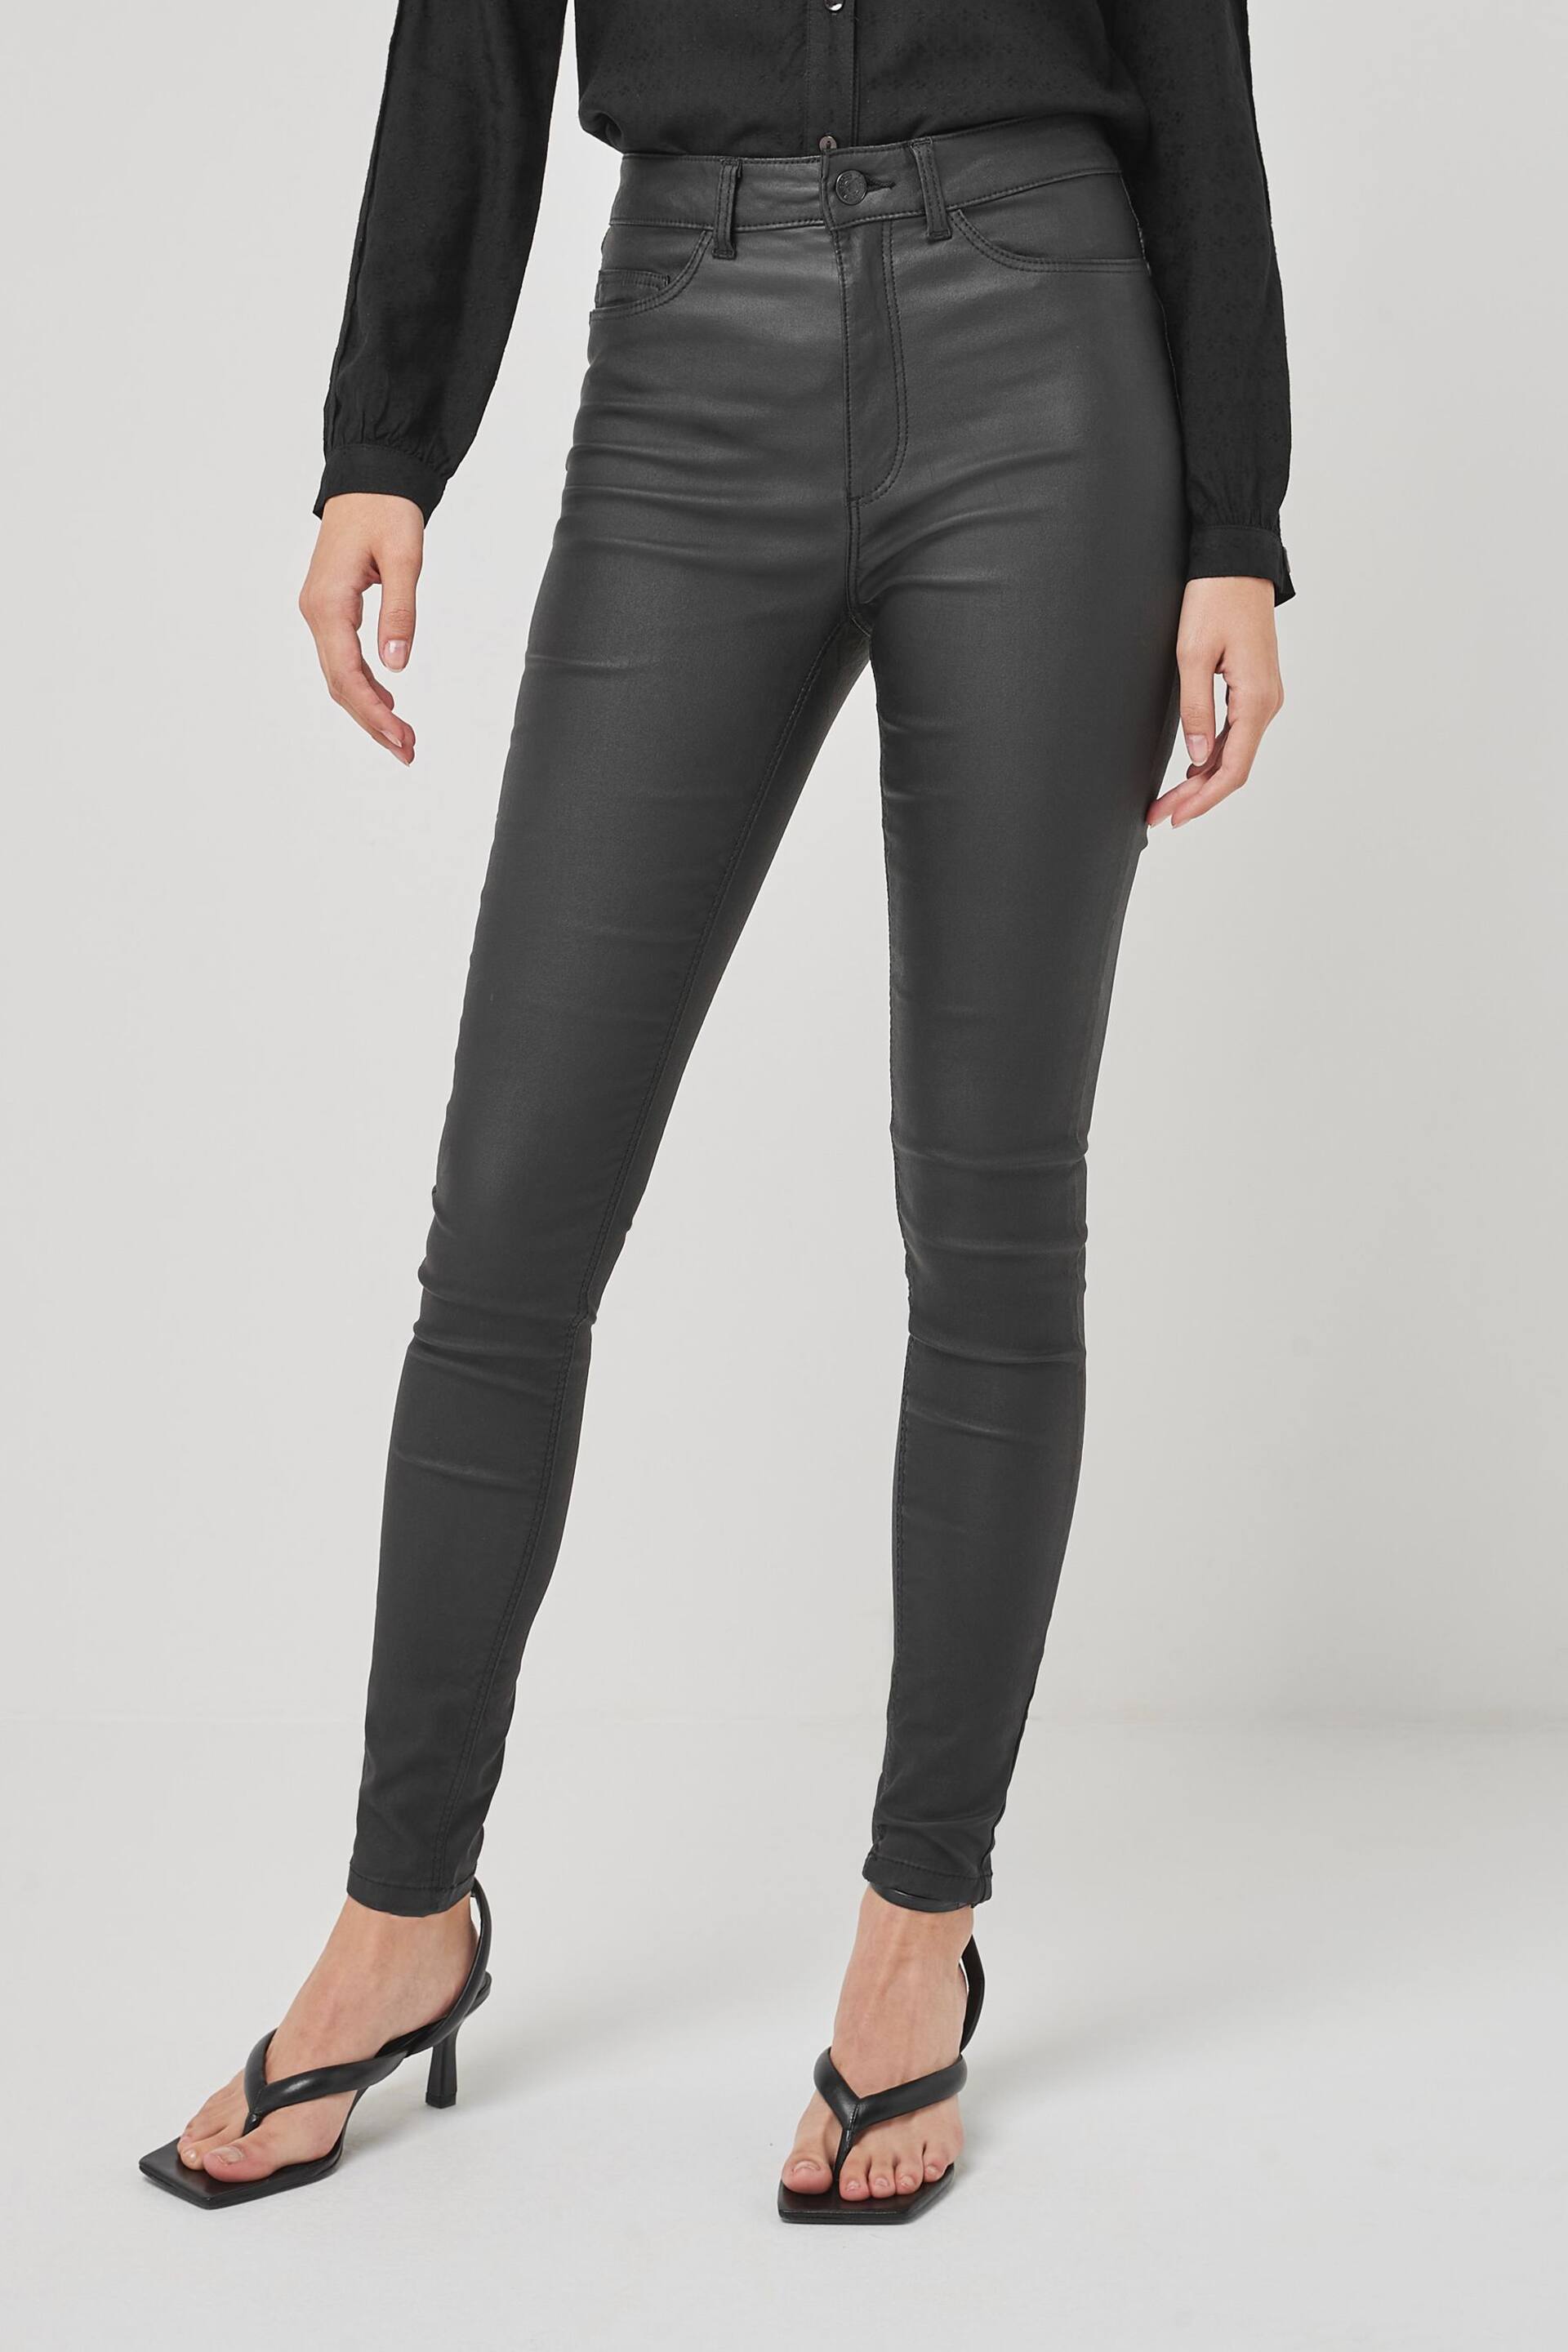 Noisy May Black Coated Callie High Waist Coated Skinny Jeans - Image 1 of 5